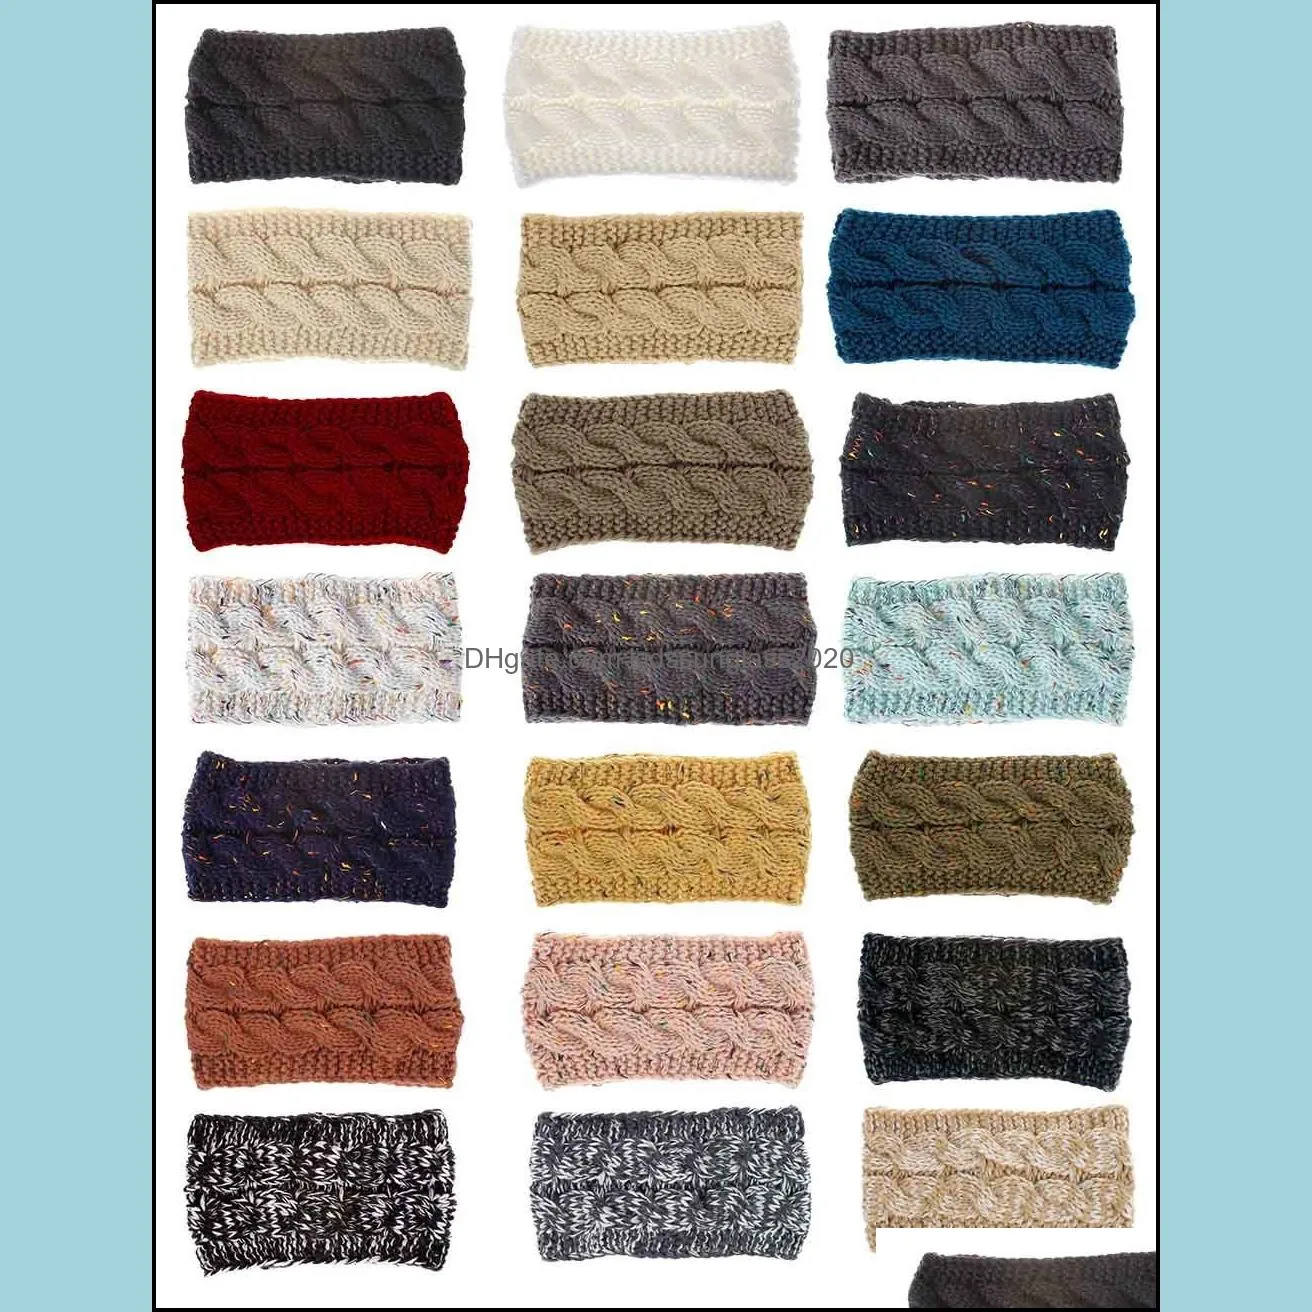 CC Hairband Colorful Knitted Crochet Twist Headband Winter Ear Warmer Elastic Hair Band Wide Hair Accessories B5